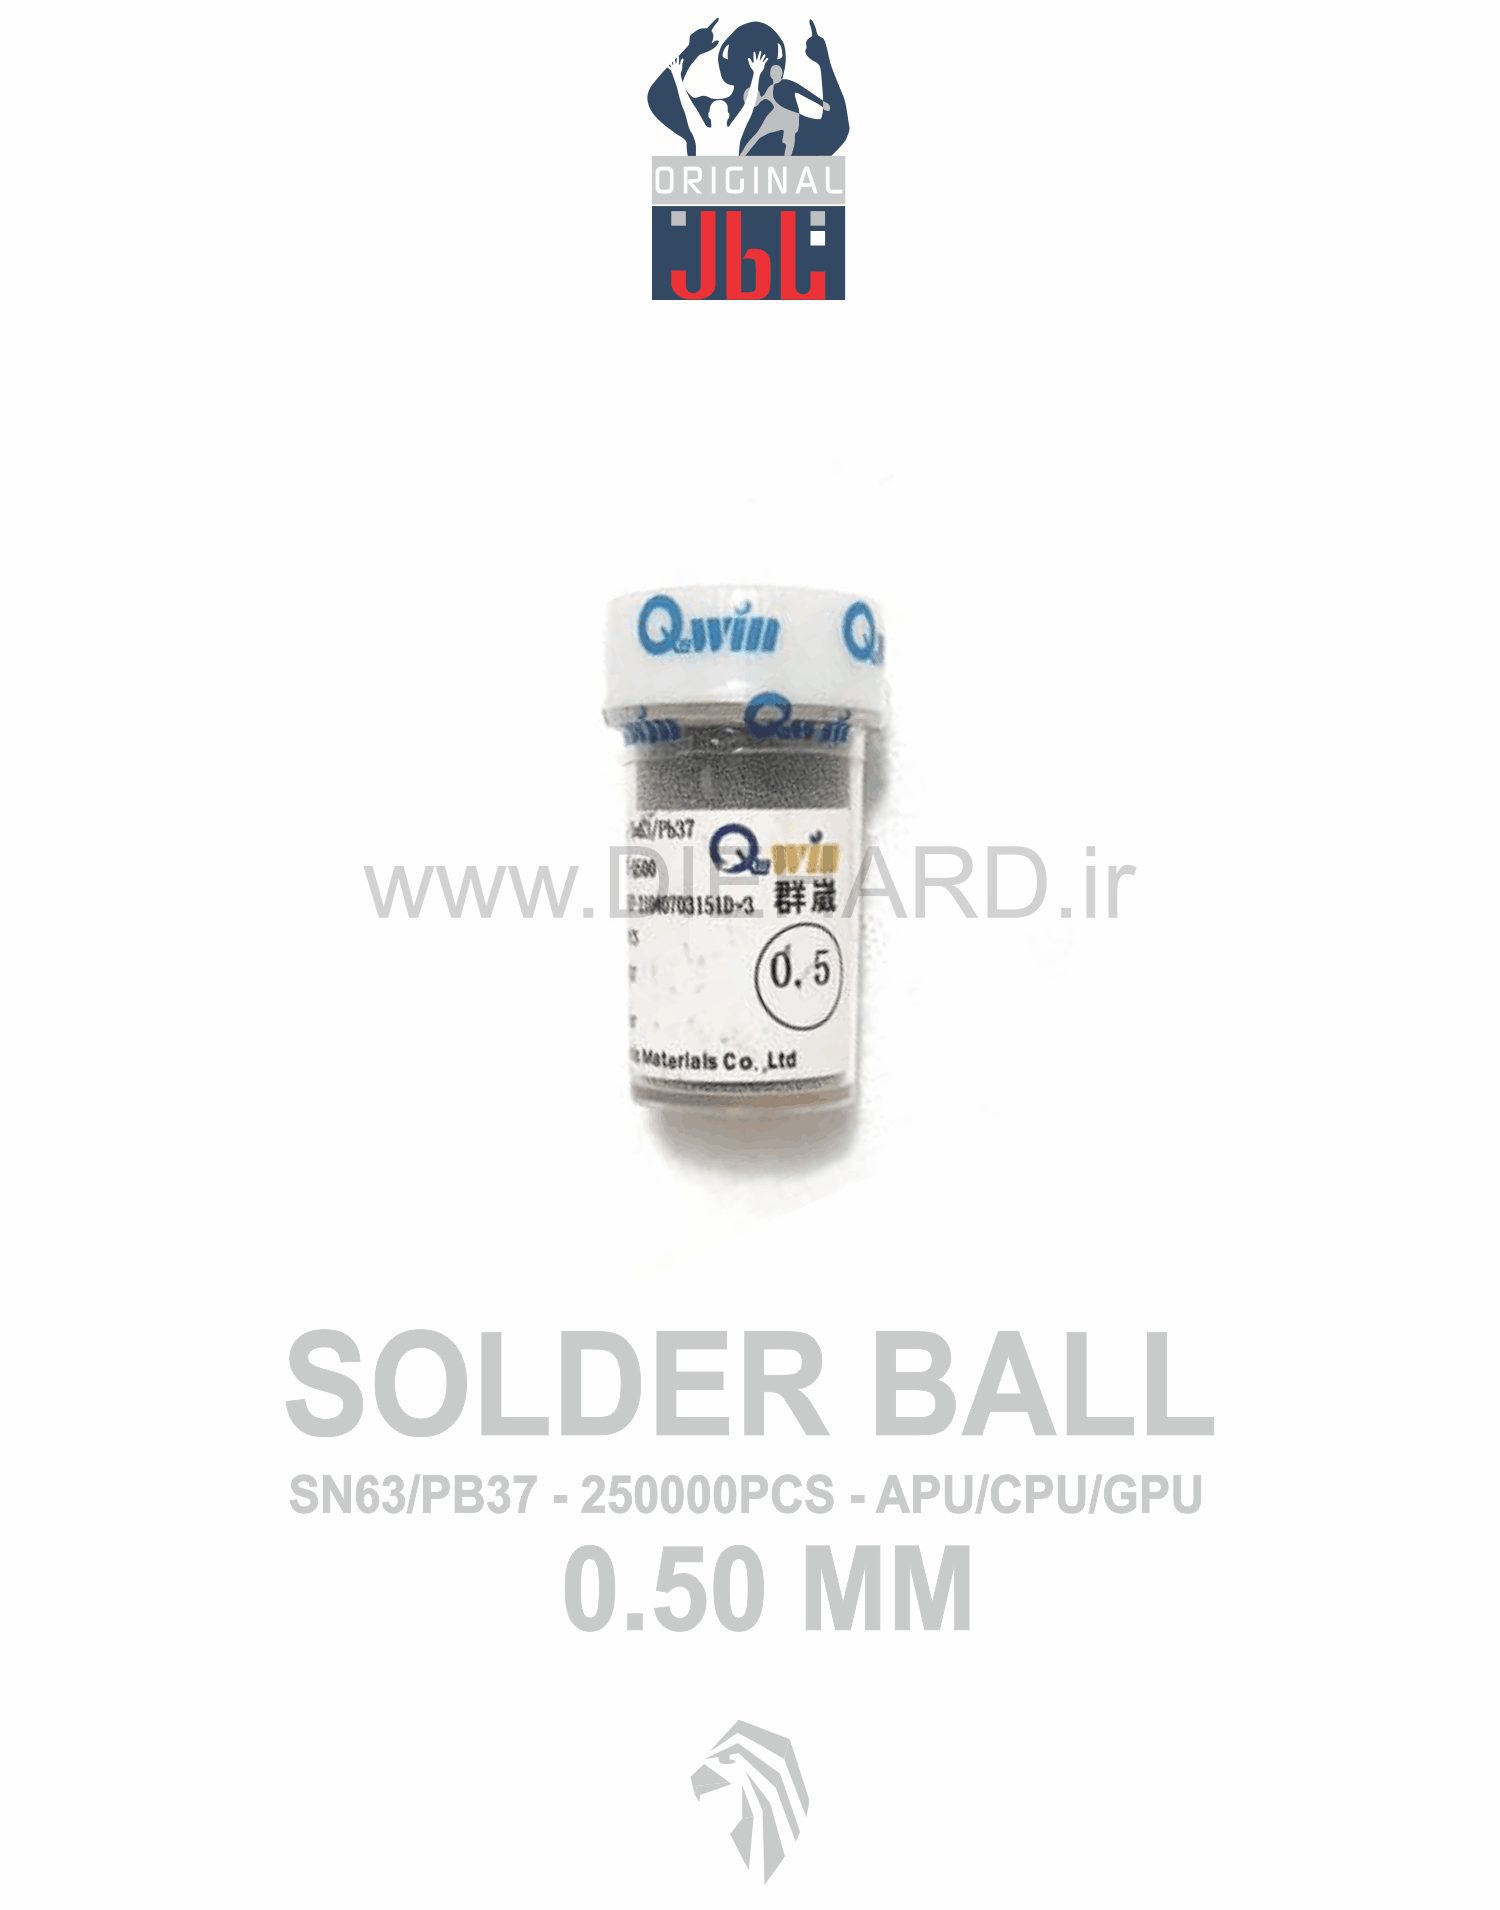 ابزار – توپ بال – Lead Solder 0.50 250000PCS